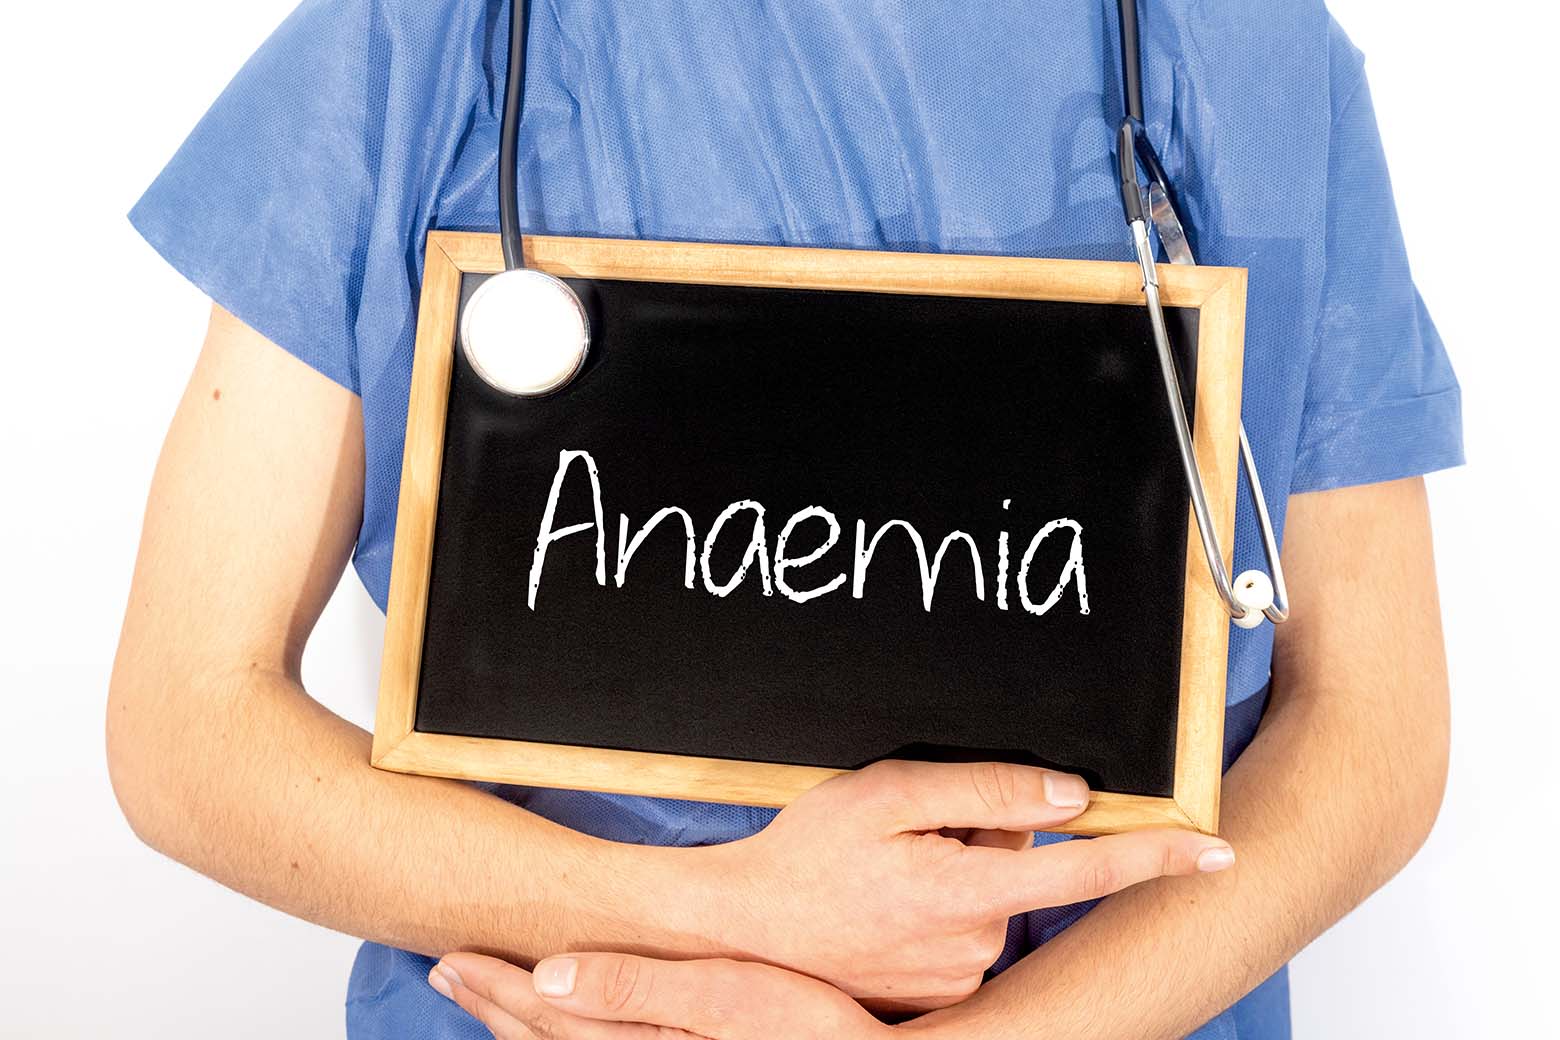 Anaemia - how to diagnose and treat